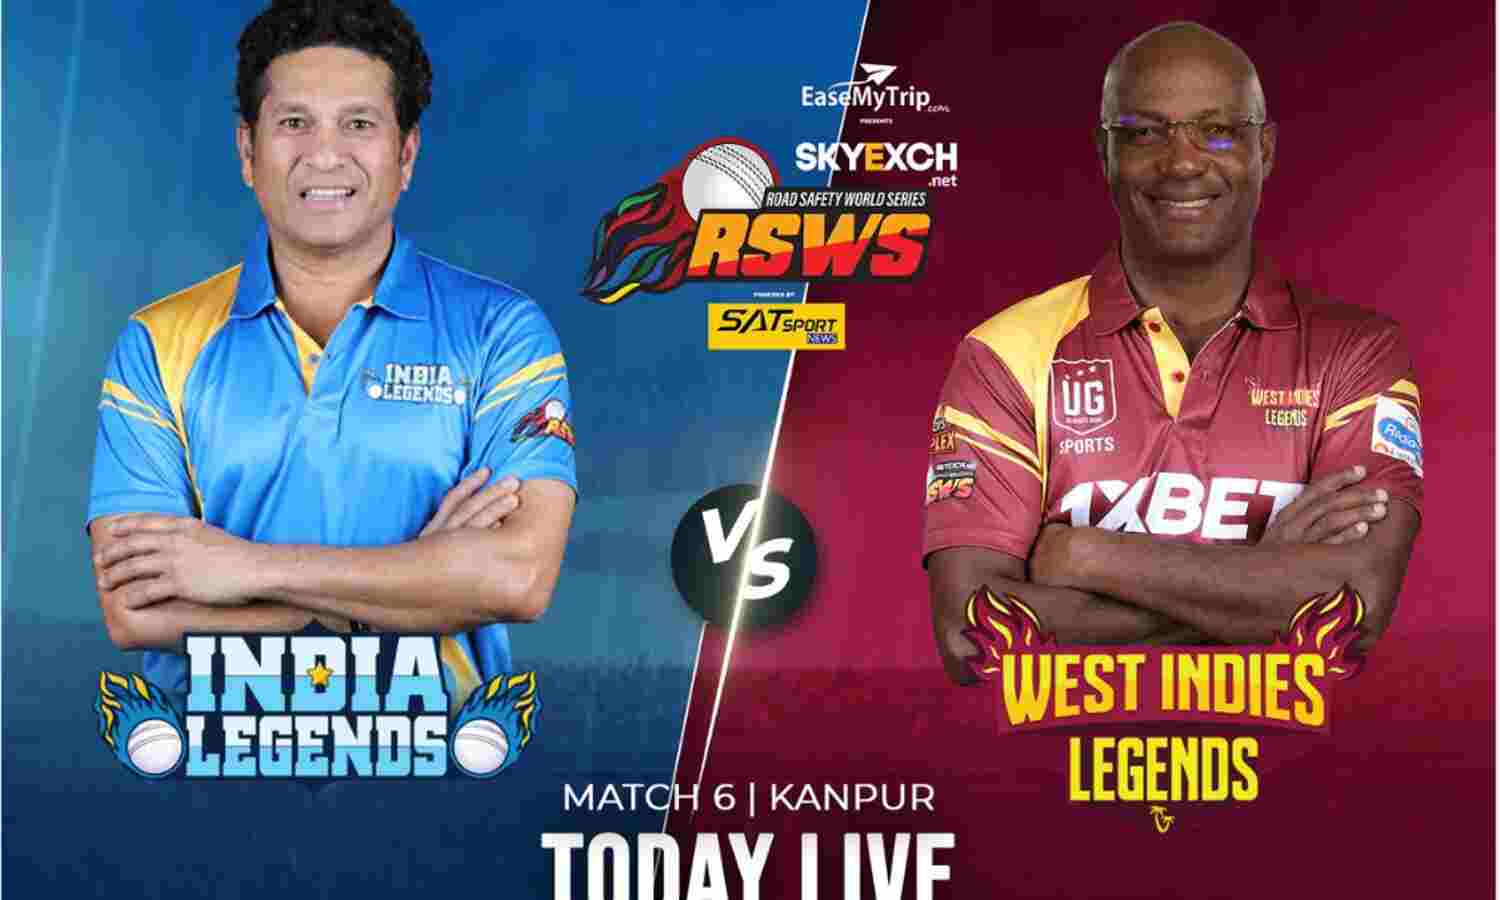 India Legends vs West Indies Legends